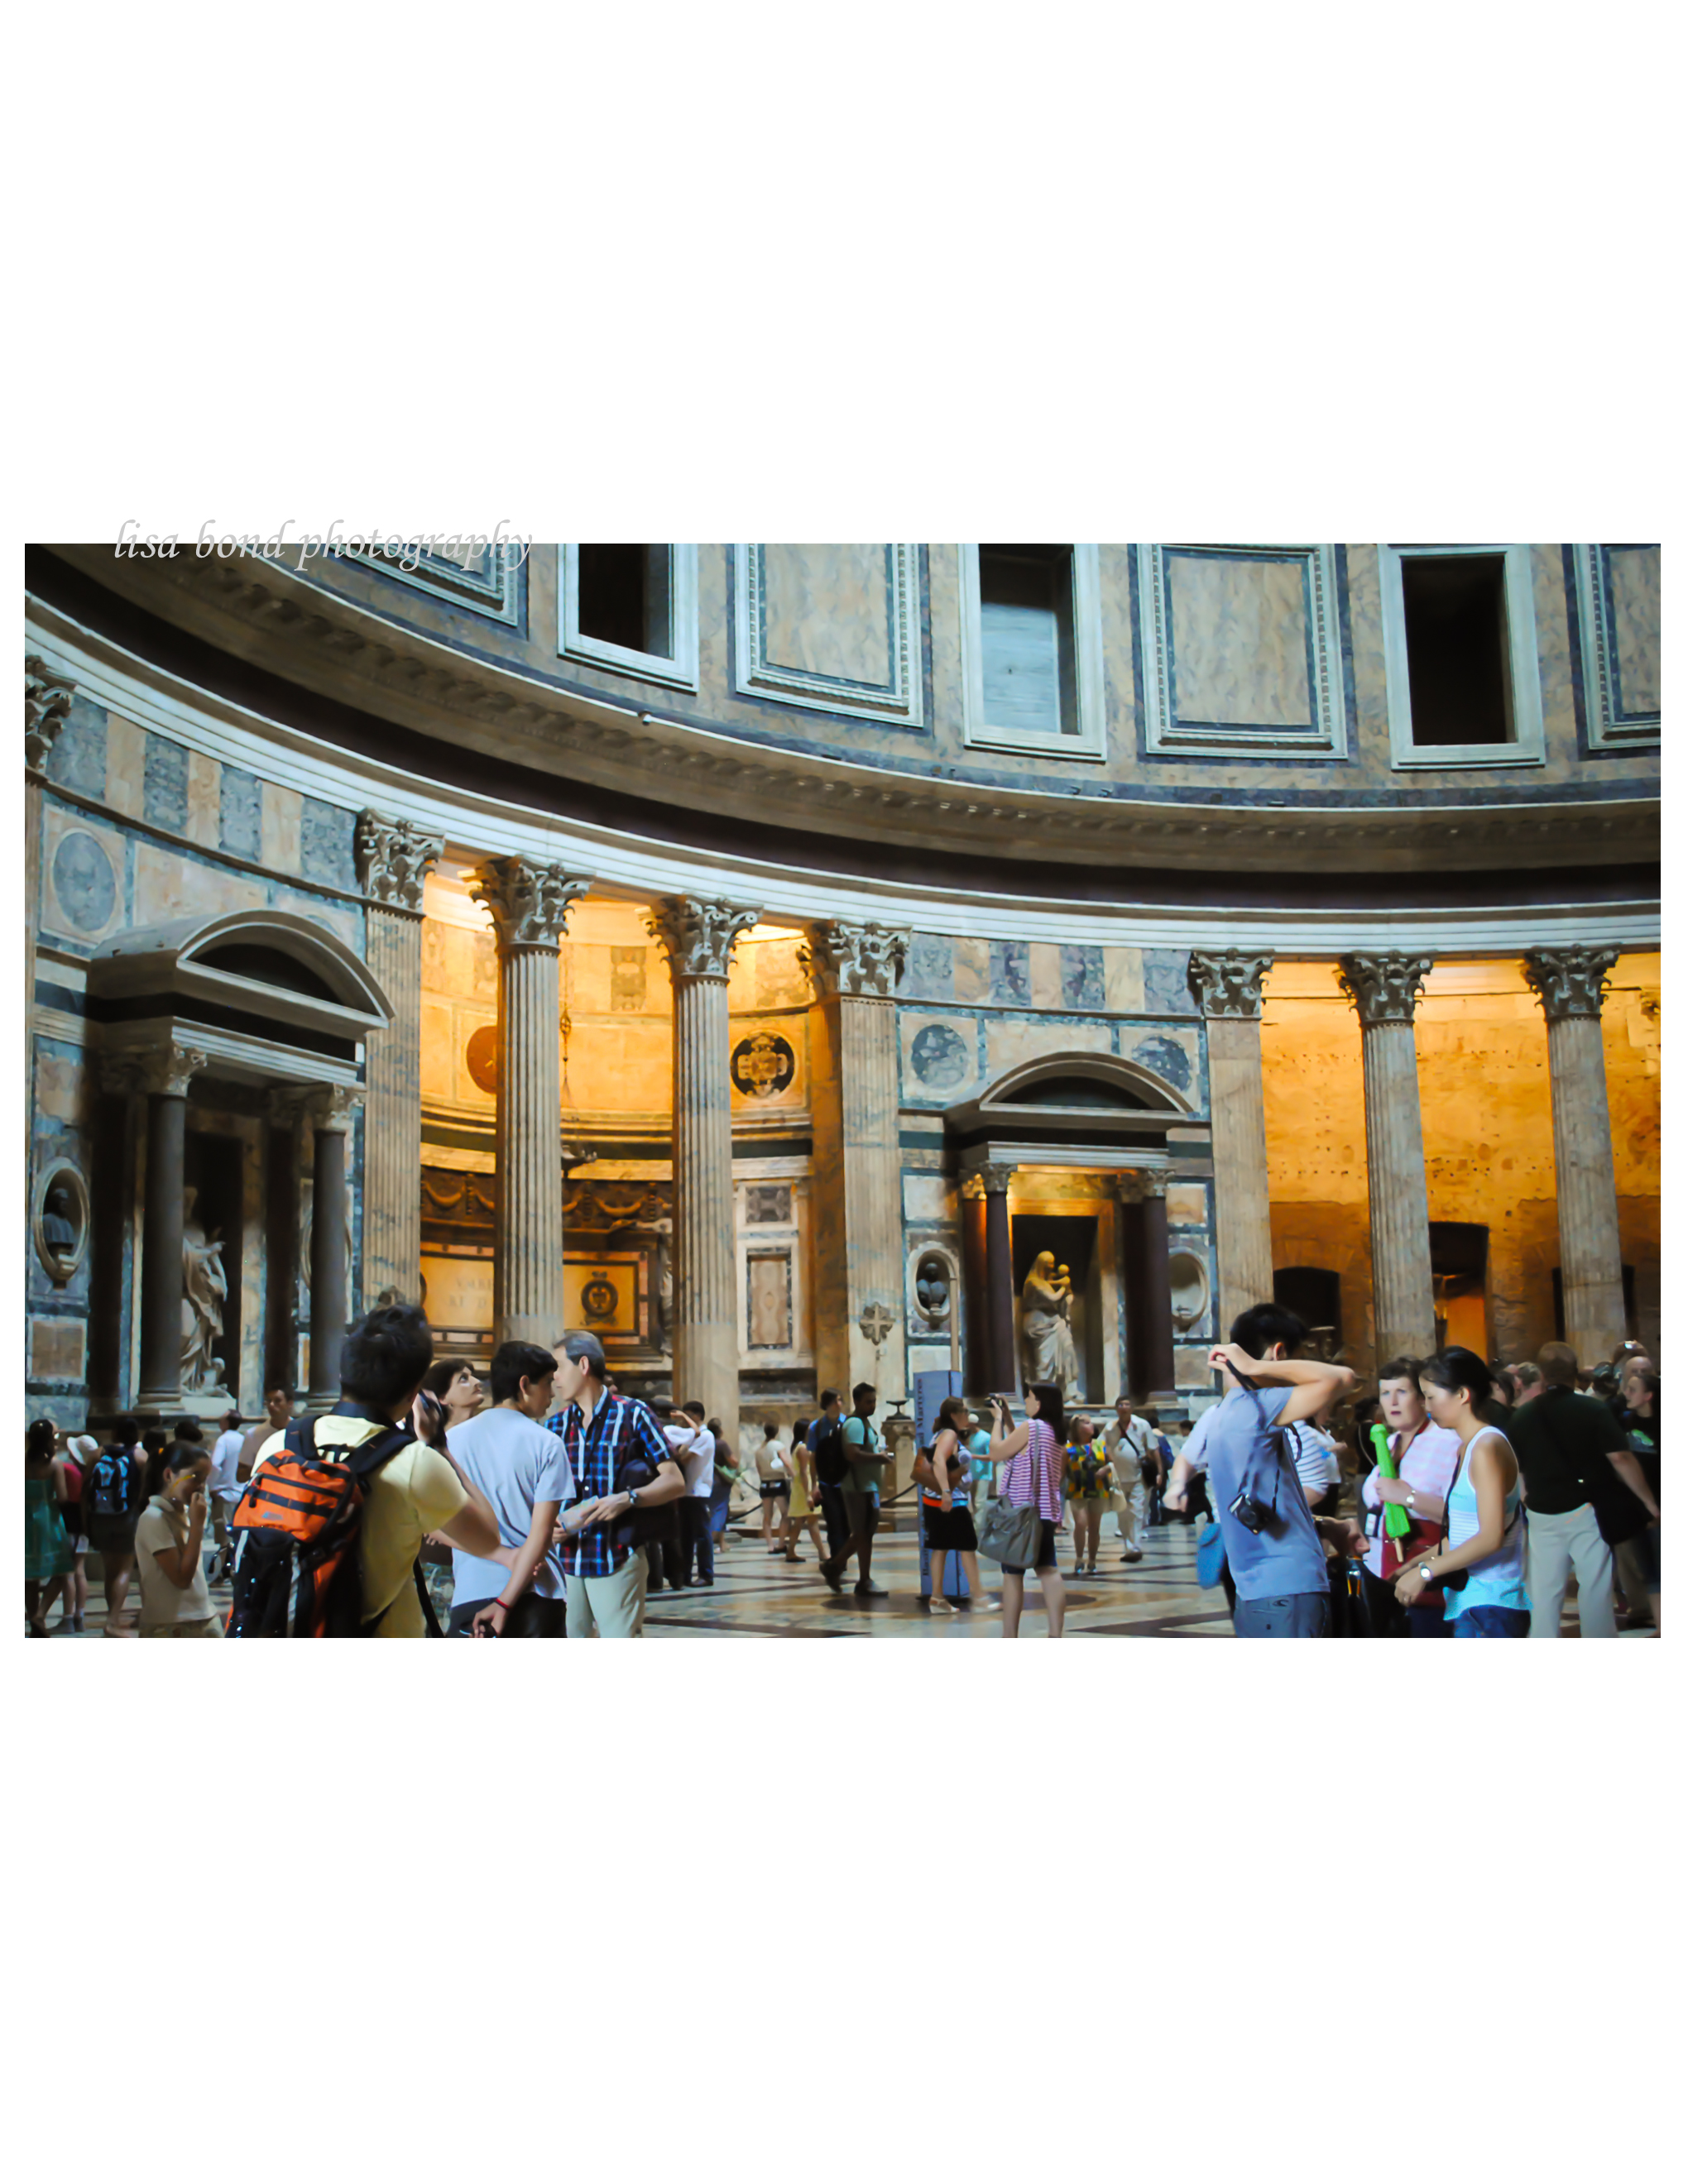 #Italy, #Pantheon, #architecture